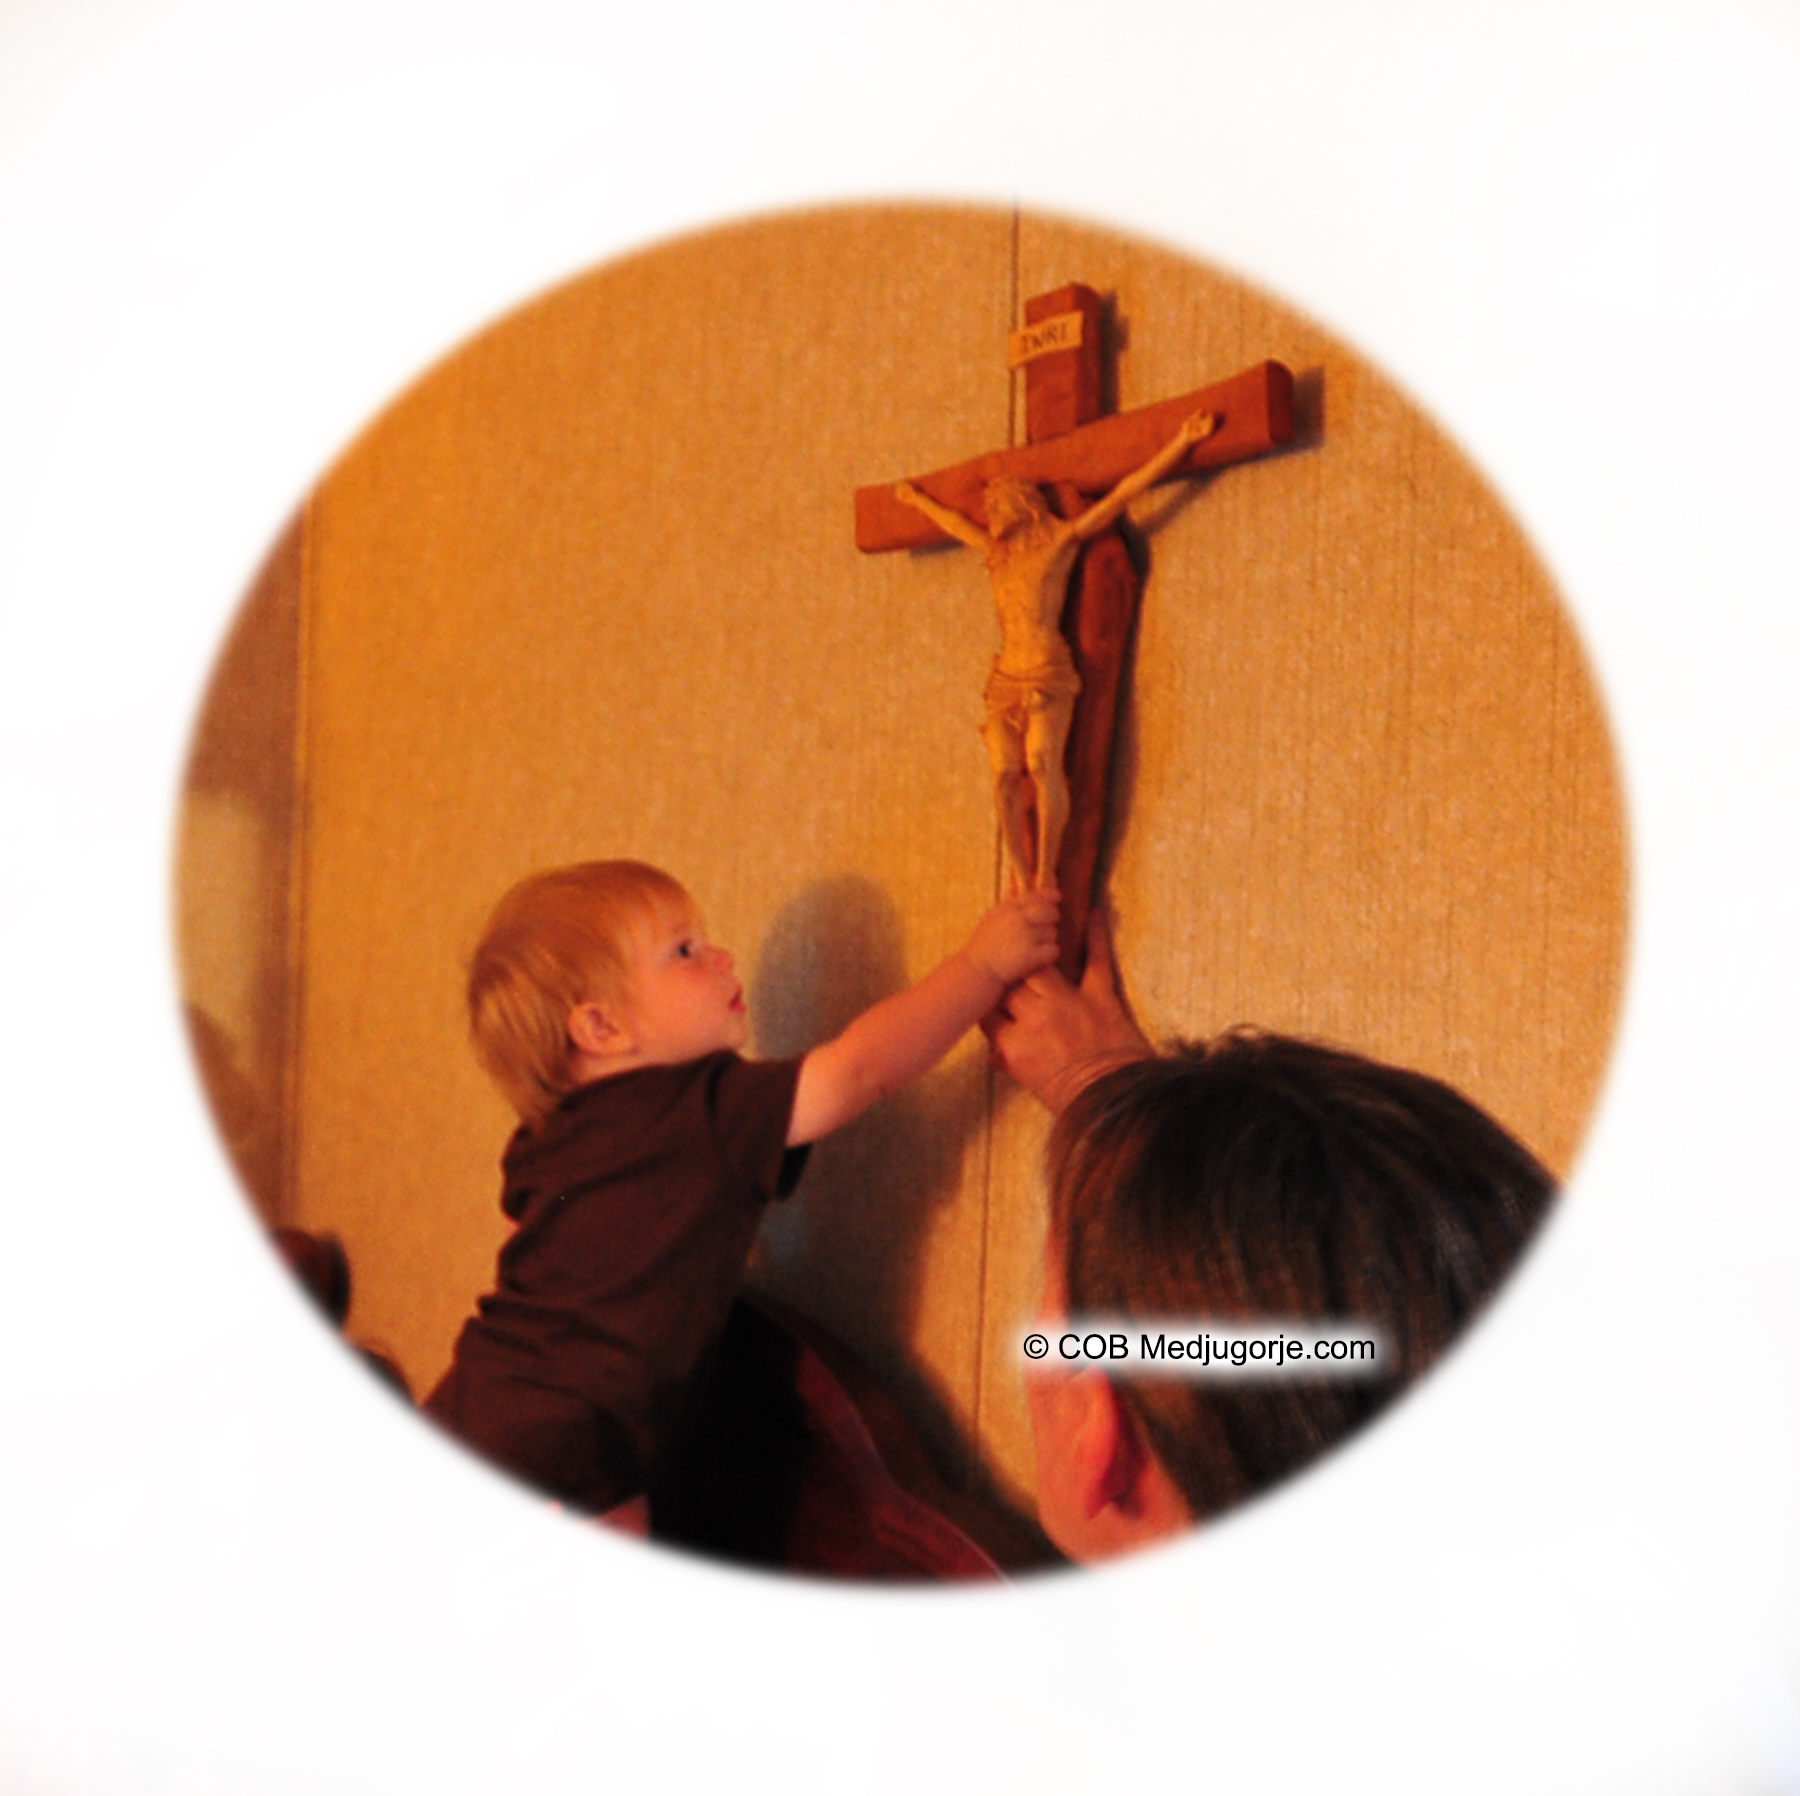 Jacob grabbing the crucifix